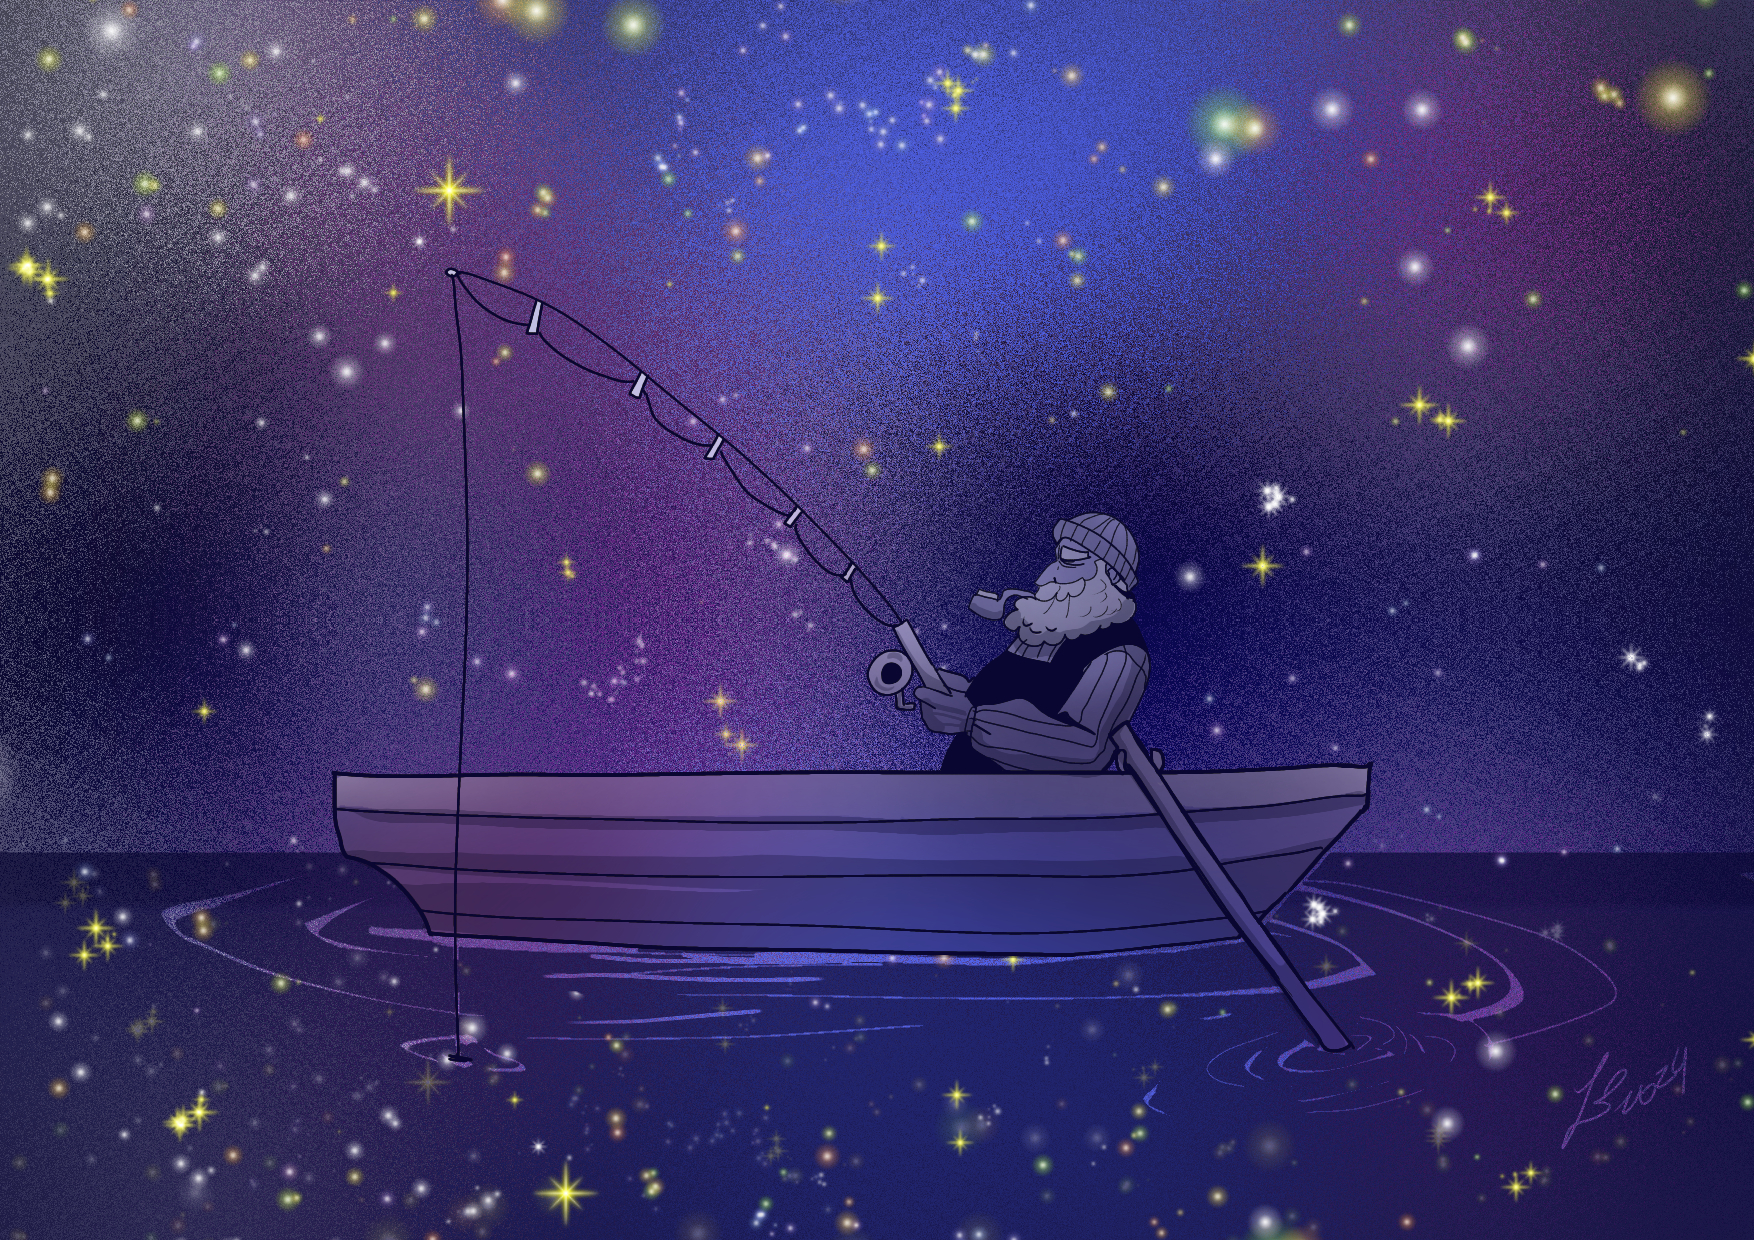 Fishing under the stars